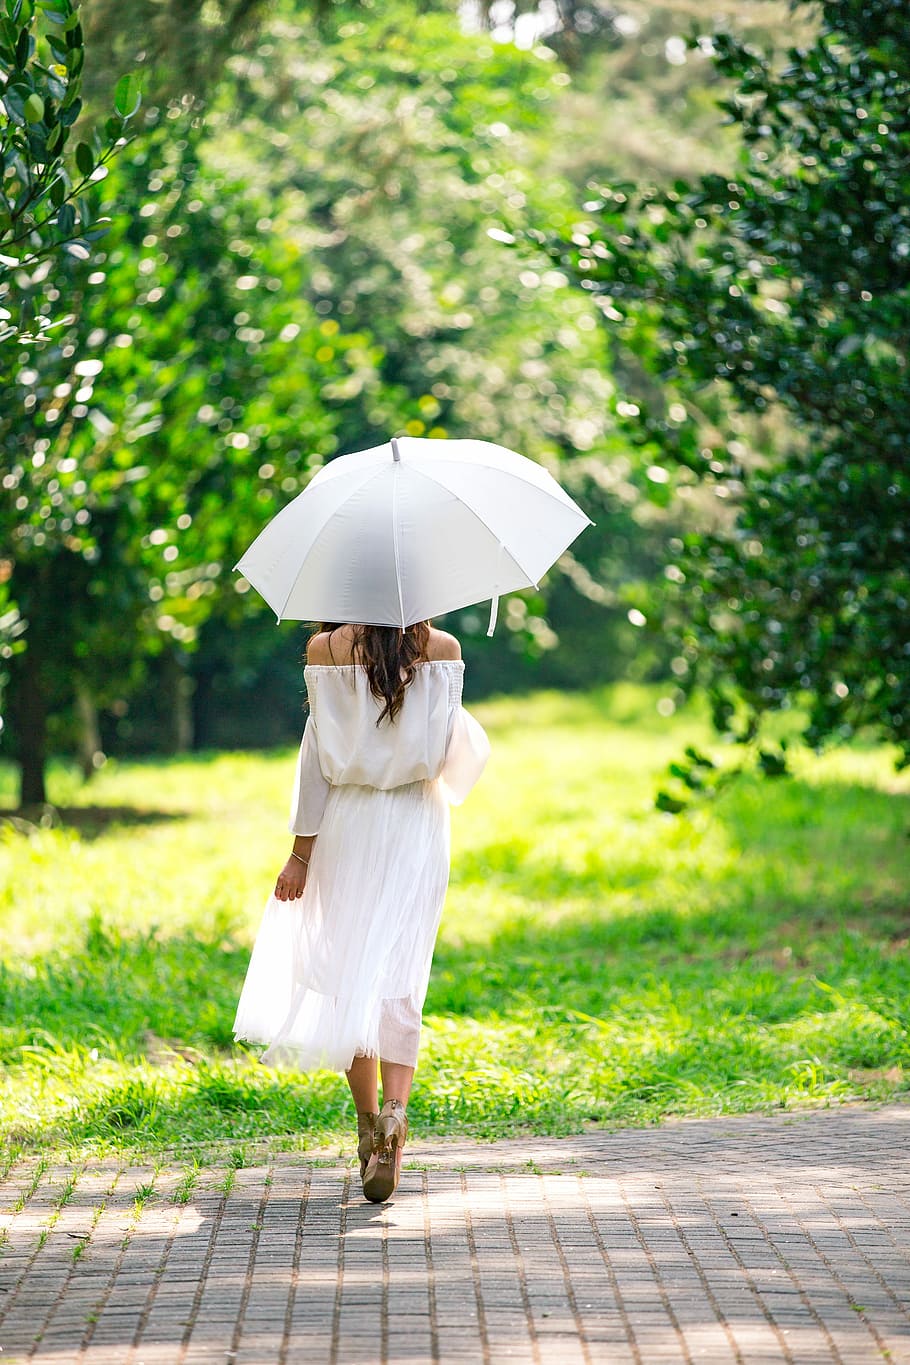 woman walking on brick pavement under umbrella during day, nature